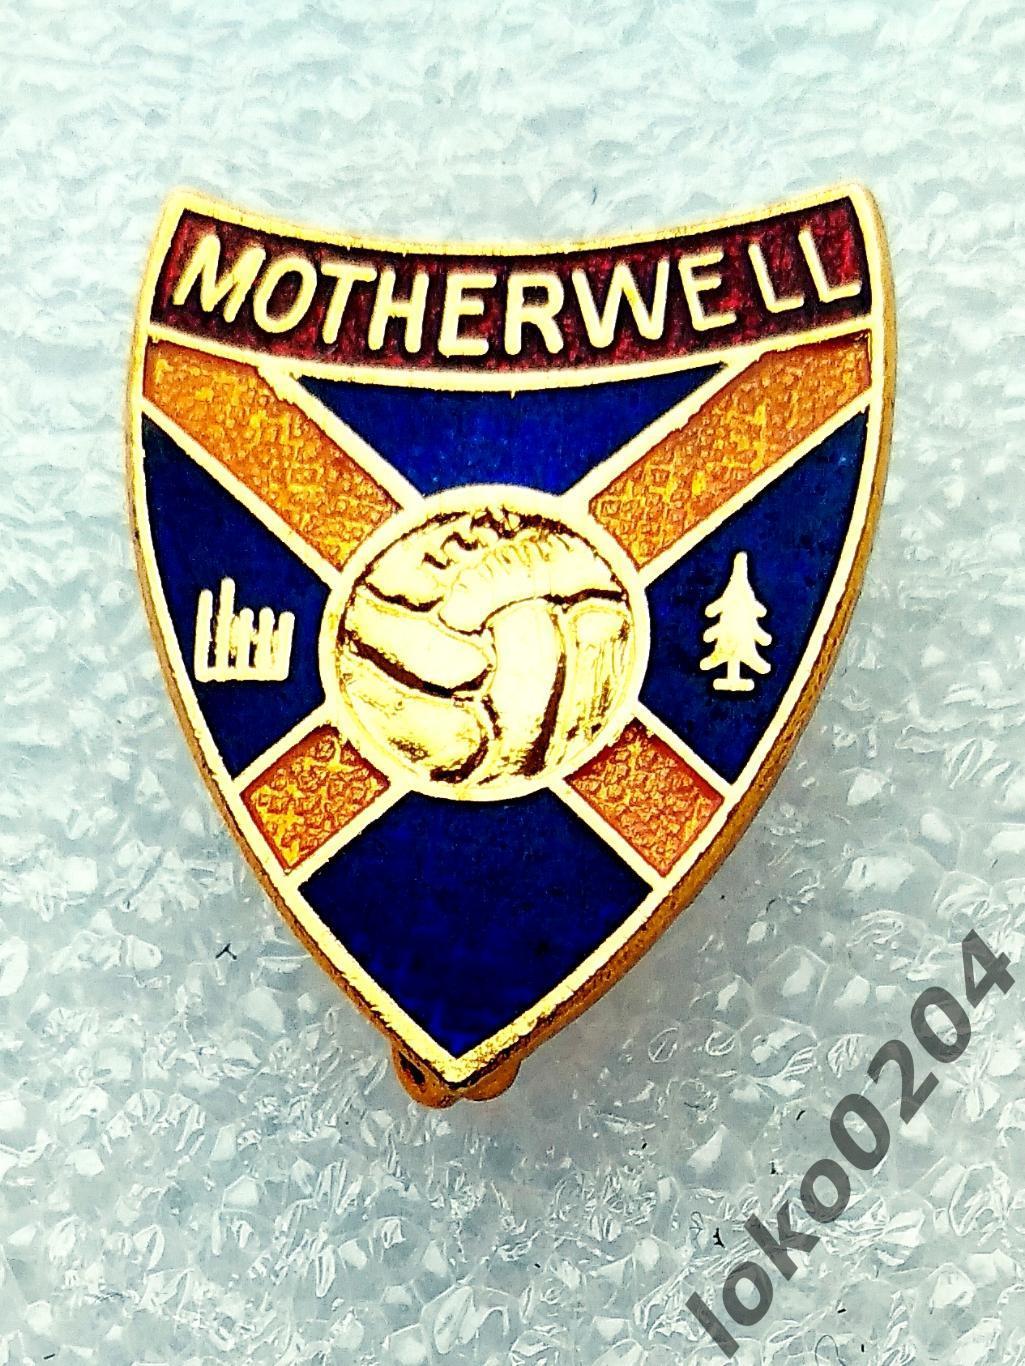 Мотеруэлл Ф.К. - Motherwell F.A.C. - ШОТЛАНДИЯ , Coffer Northampton .